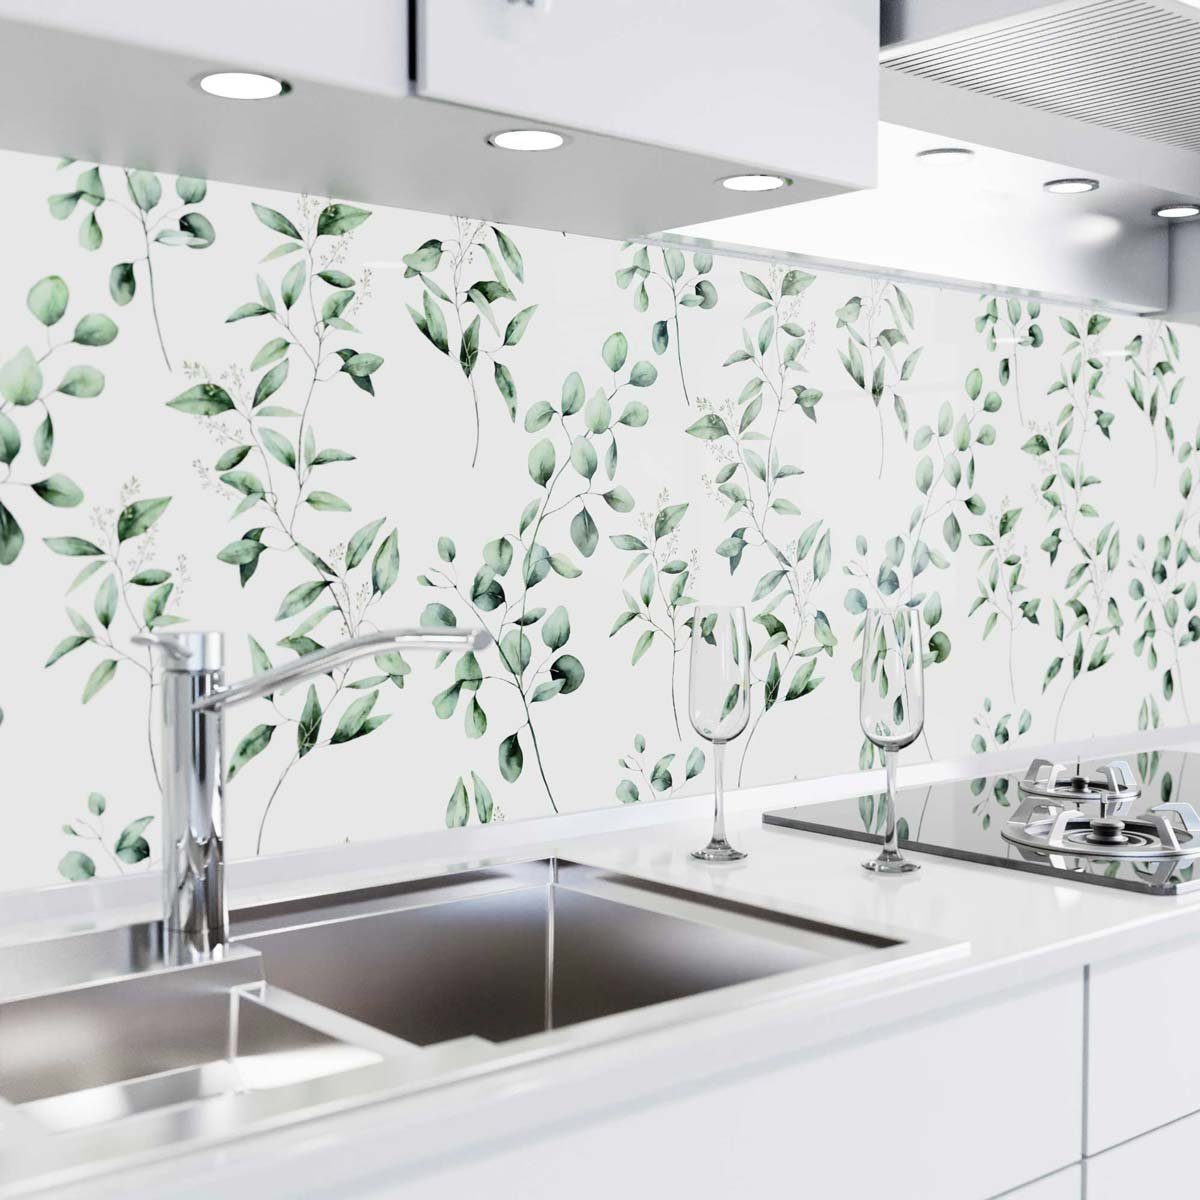 danario Küchenrückwand selbstklebend - Glasoptik - Spritzschutz Küche - versteifte PET Folie Eucalyptus